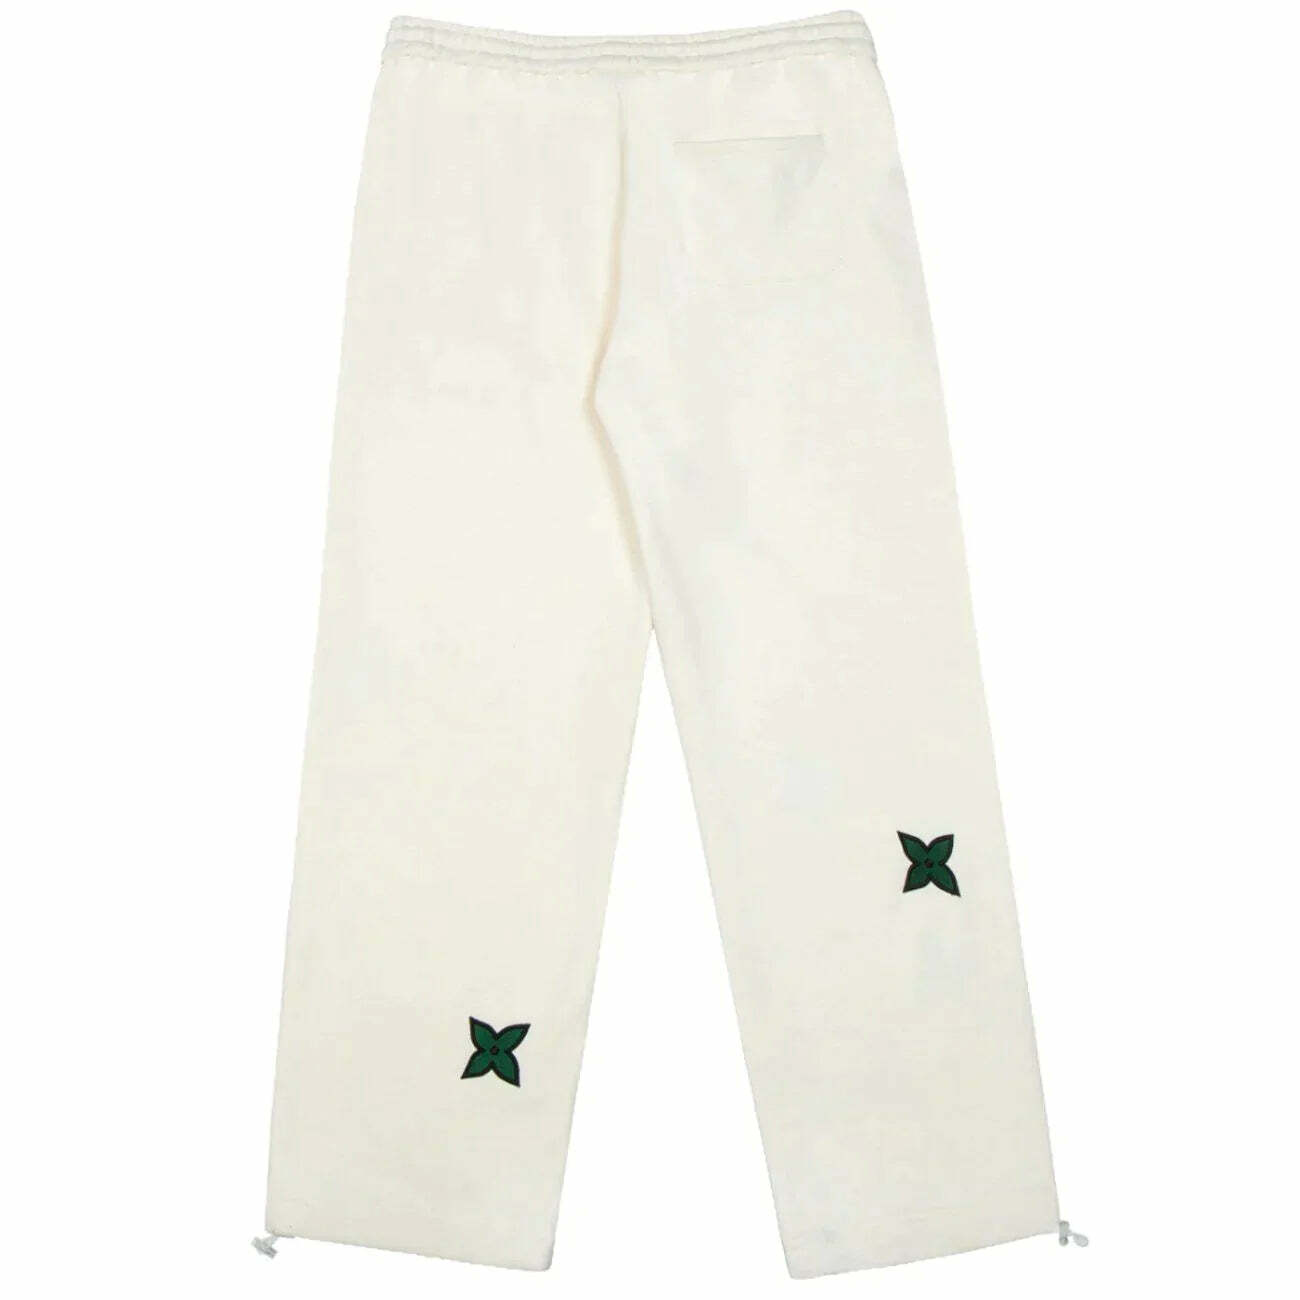 embroidered drawstring pants edgy & stylish streetwear 4132